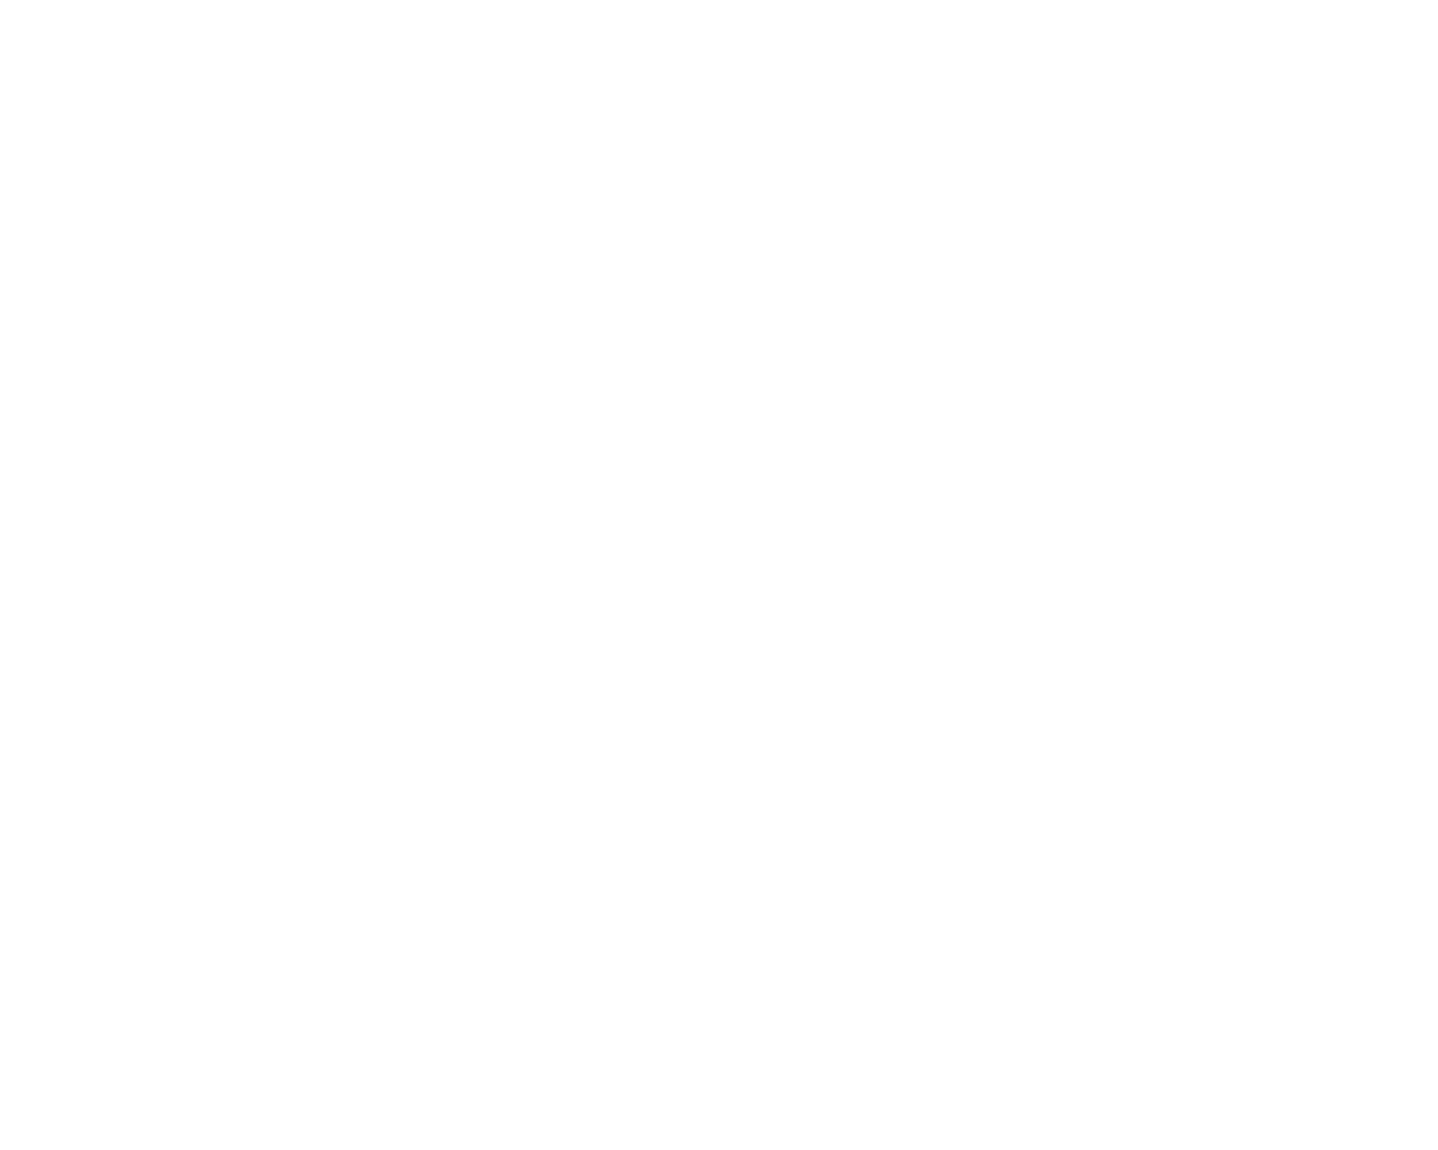 Gorsey Meadow